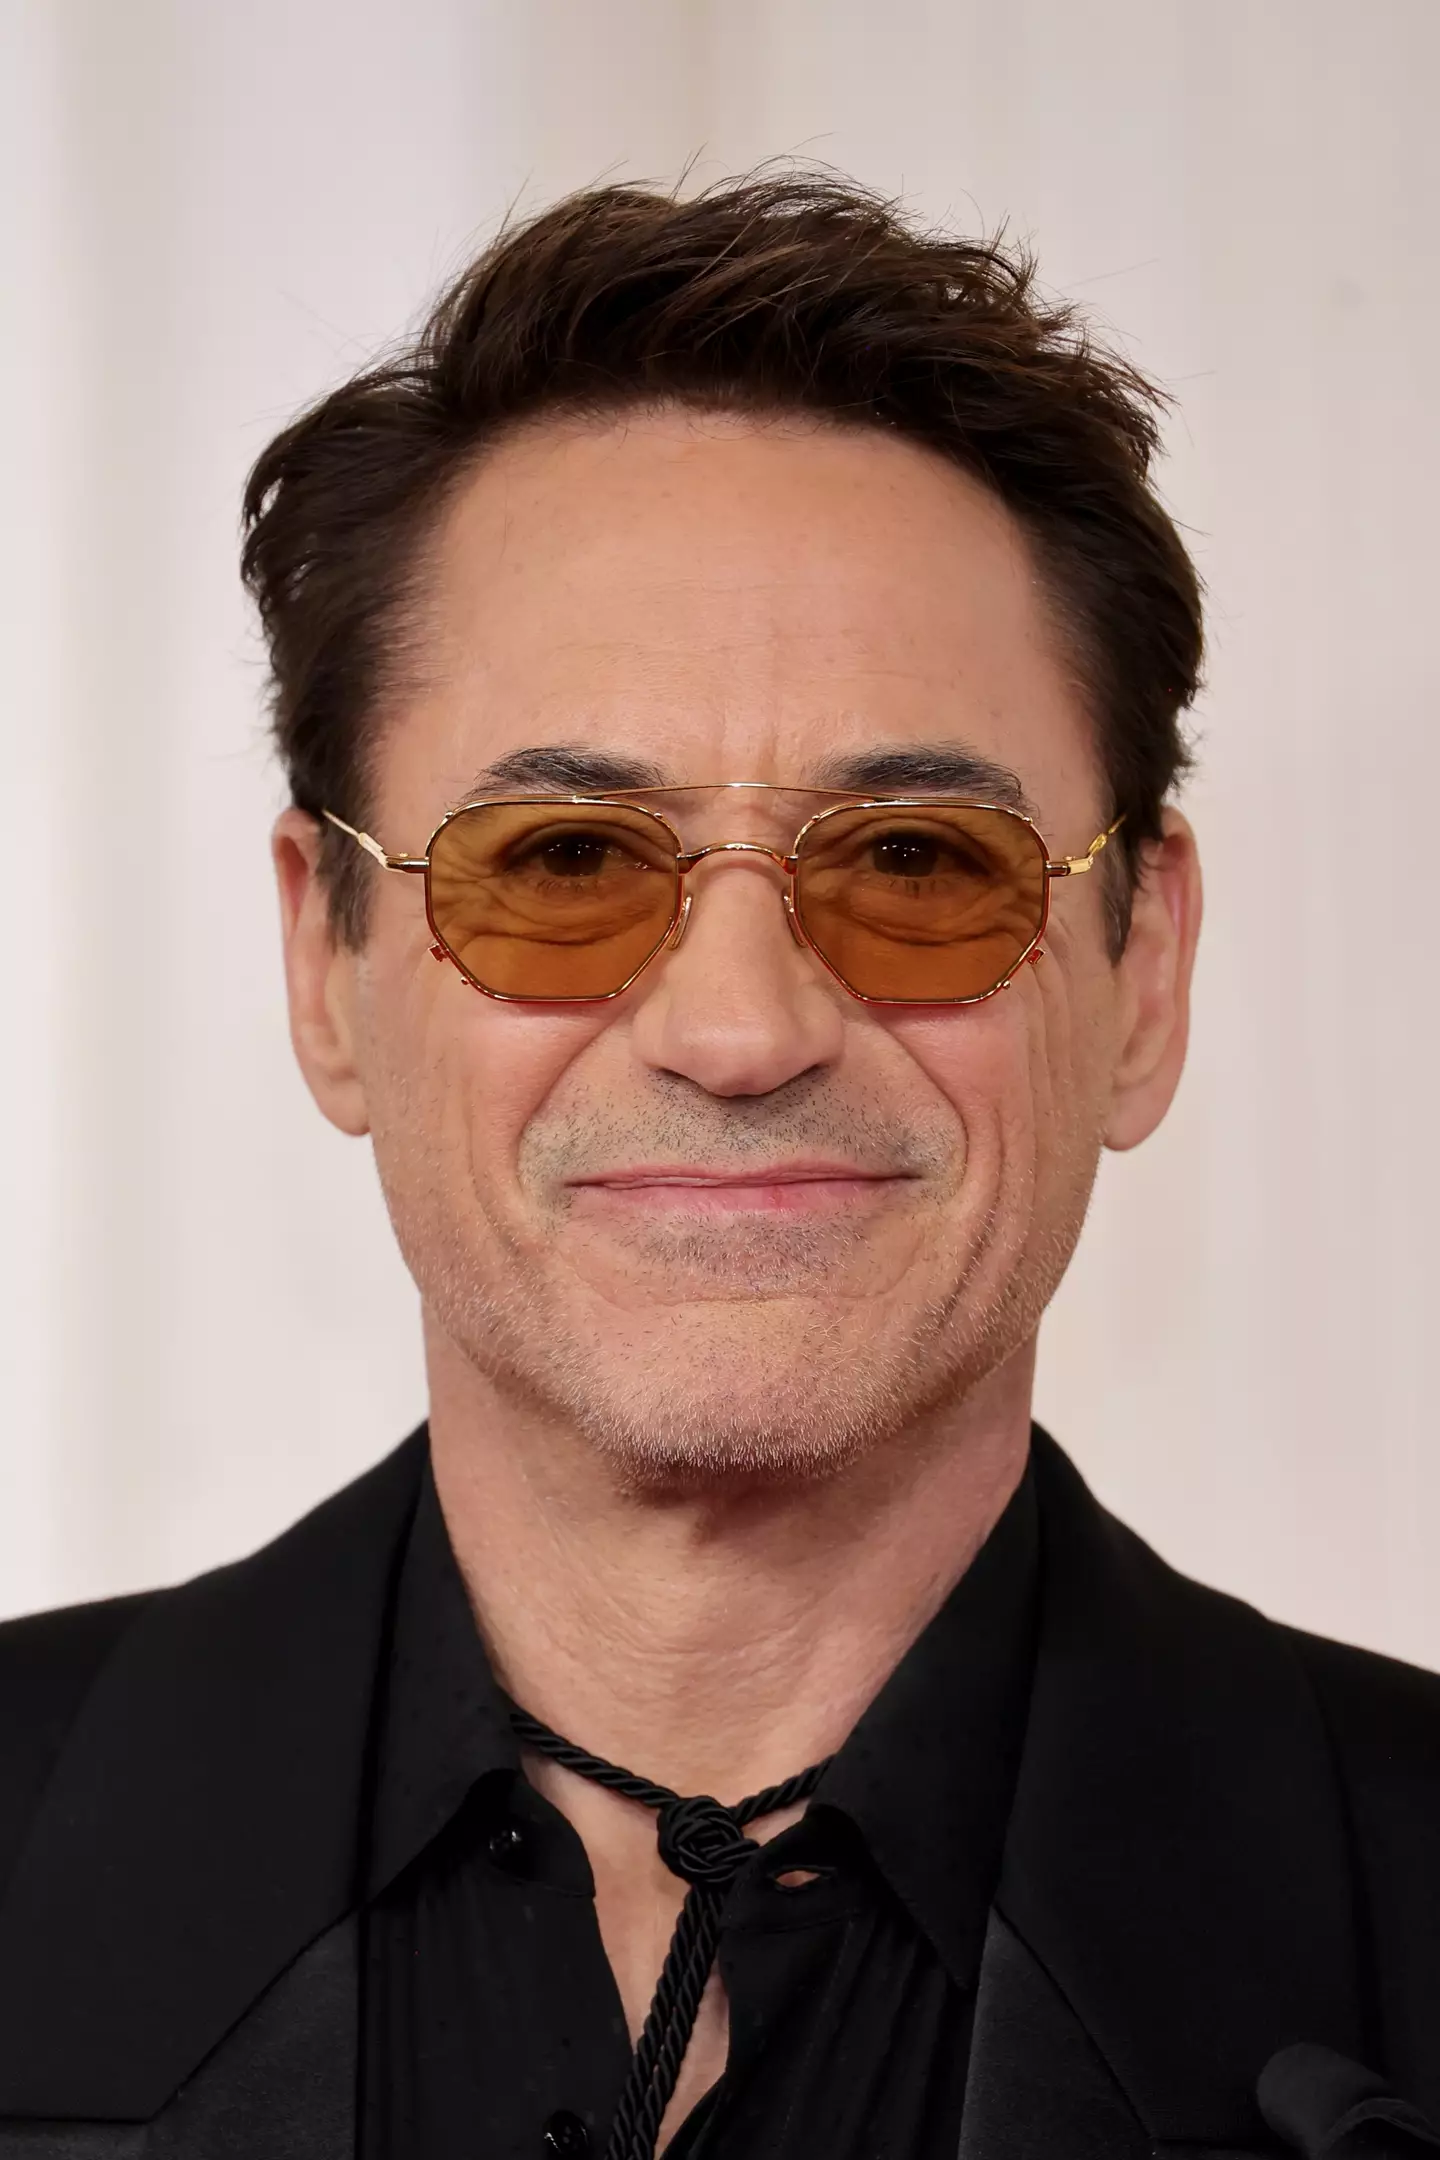 Robert Downey Jr. walks the red carpet at the Oscars.